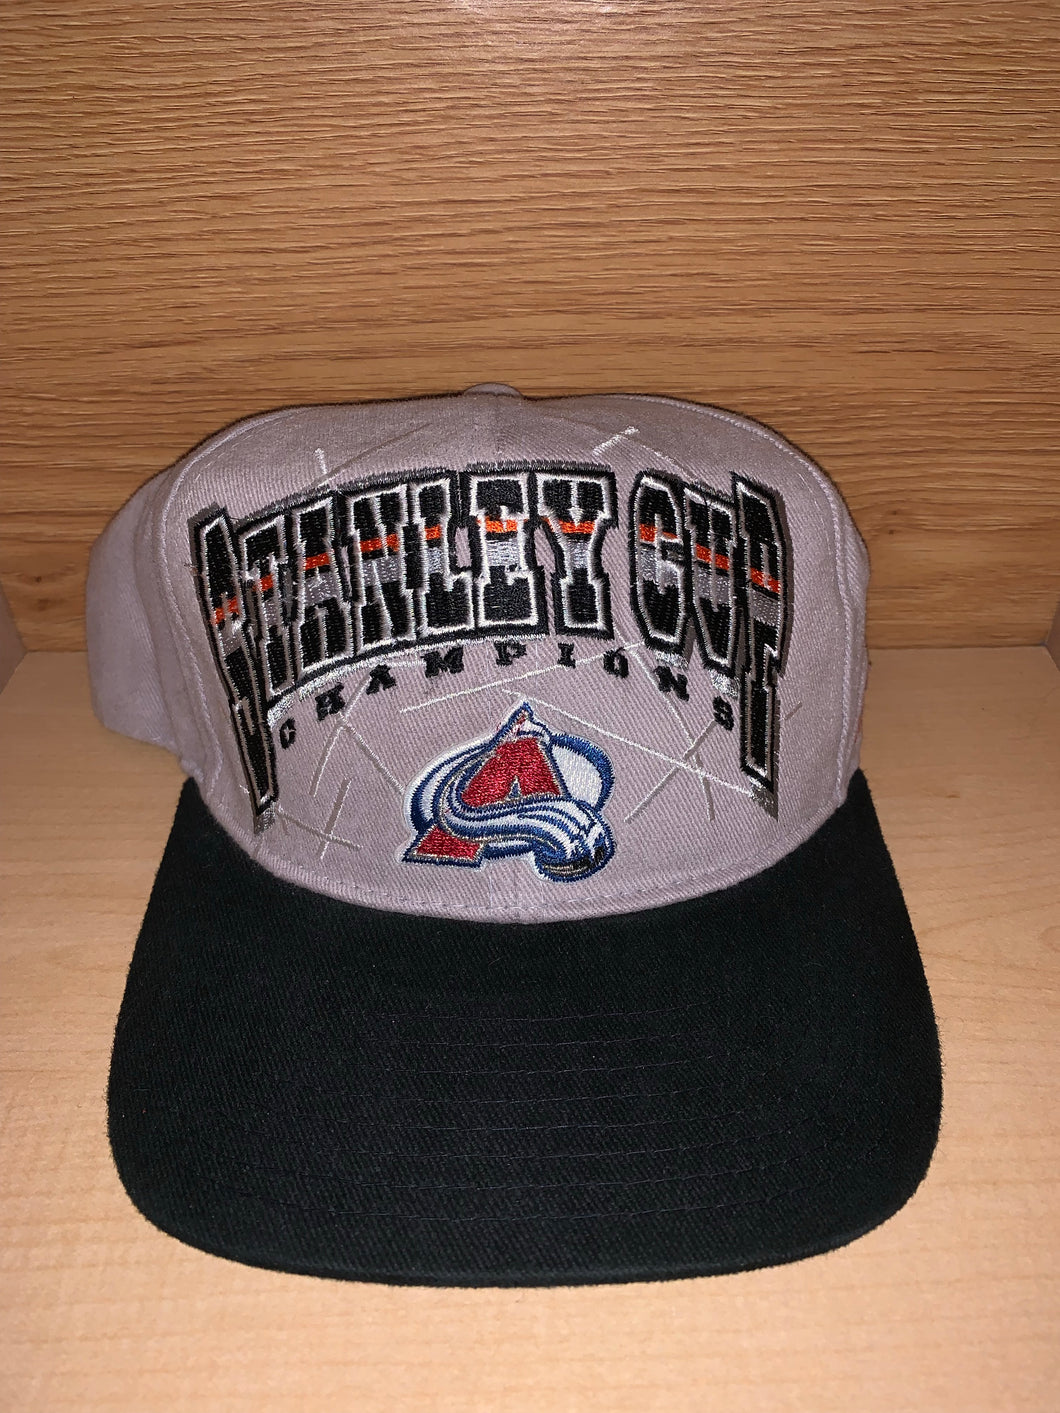 Vintage 1996 Stanley Cup Champions Starter Hat